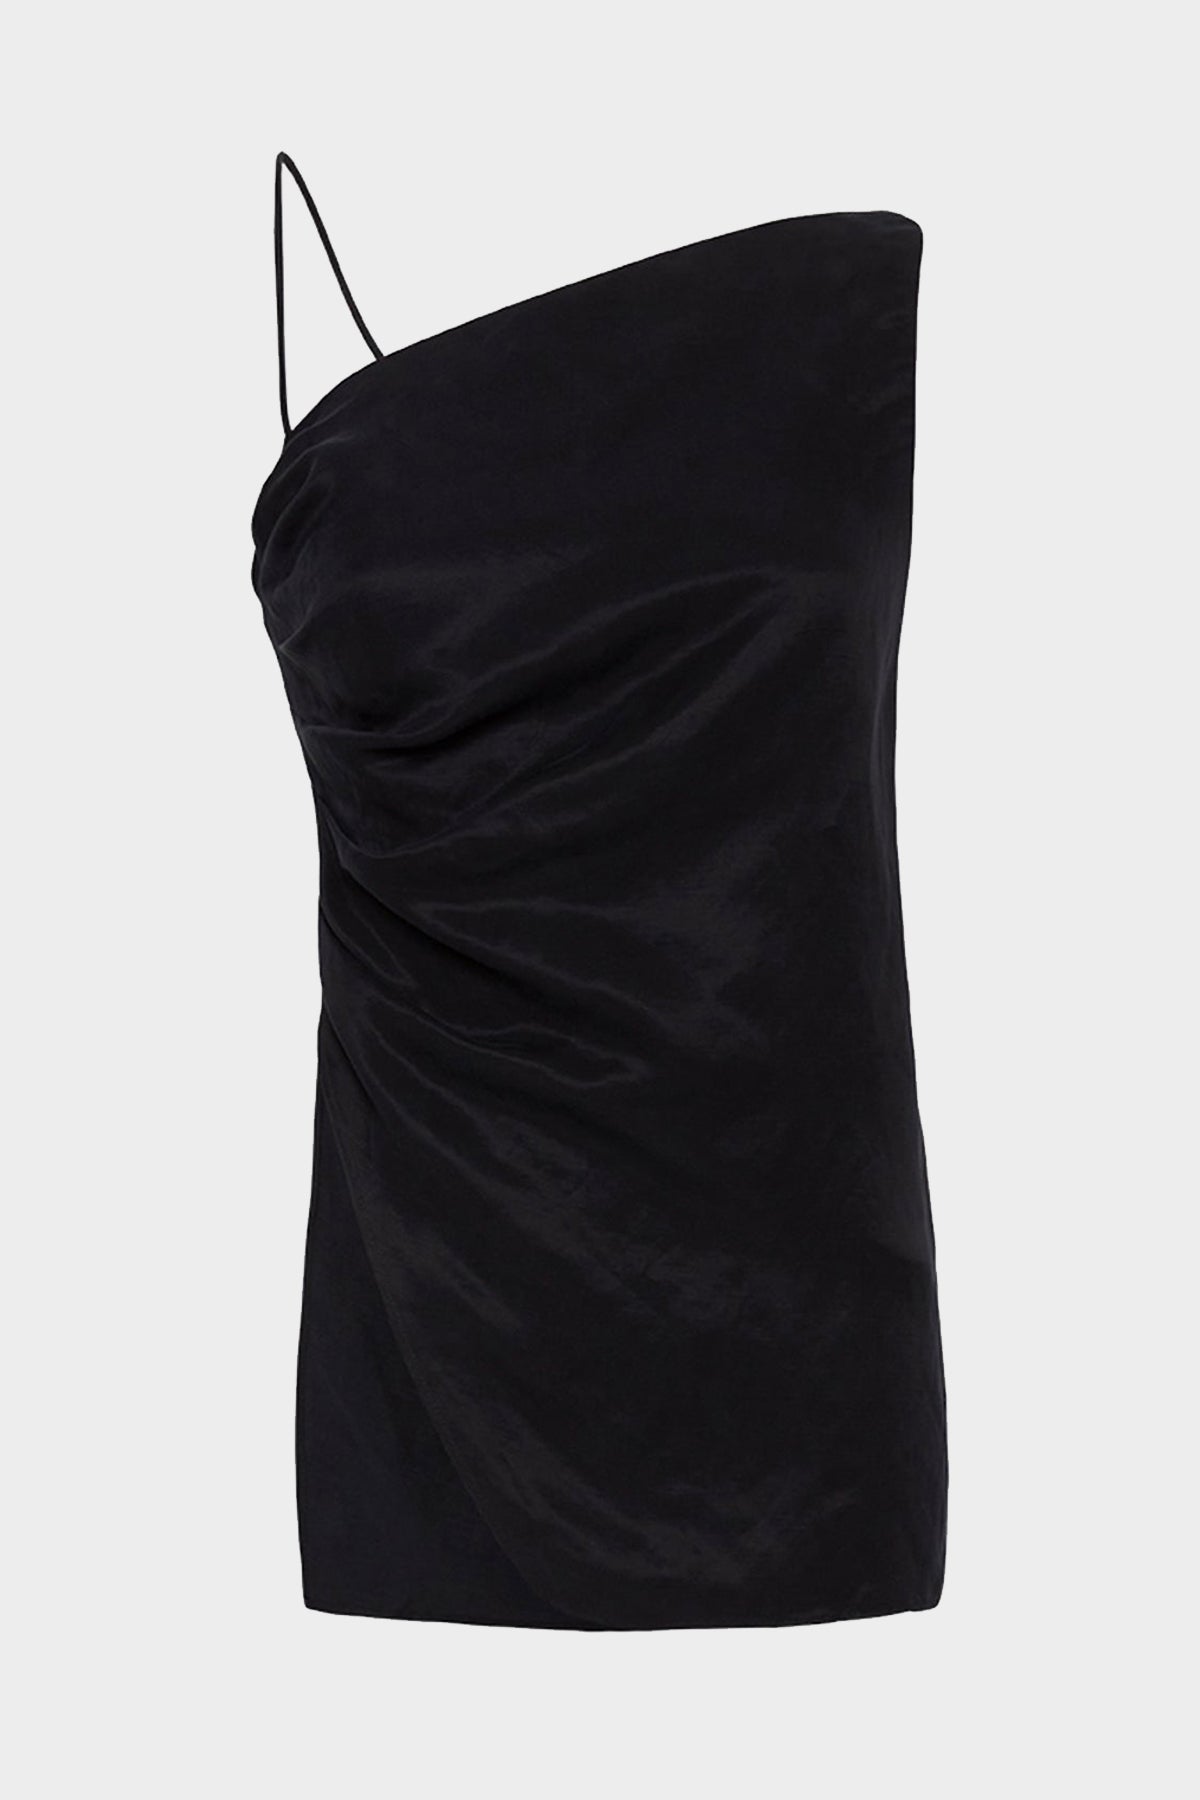 Allure Asymmetric Draped Cami in Black - shop-olivia.com